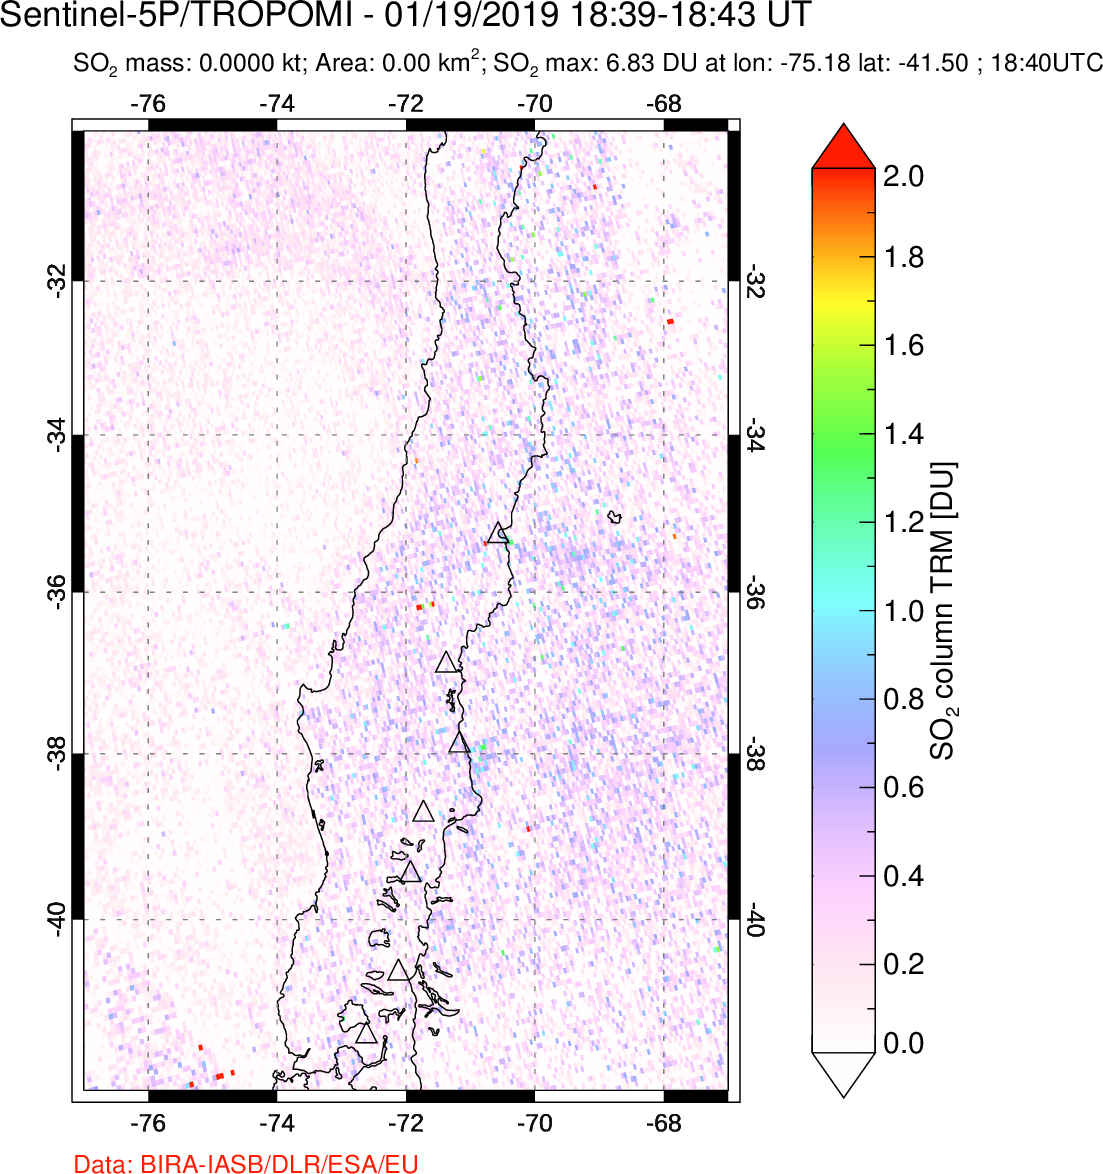 A sulfur dioxide image over Central Chile on Jan 19, 2019.